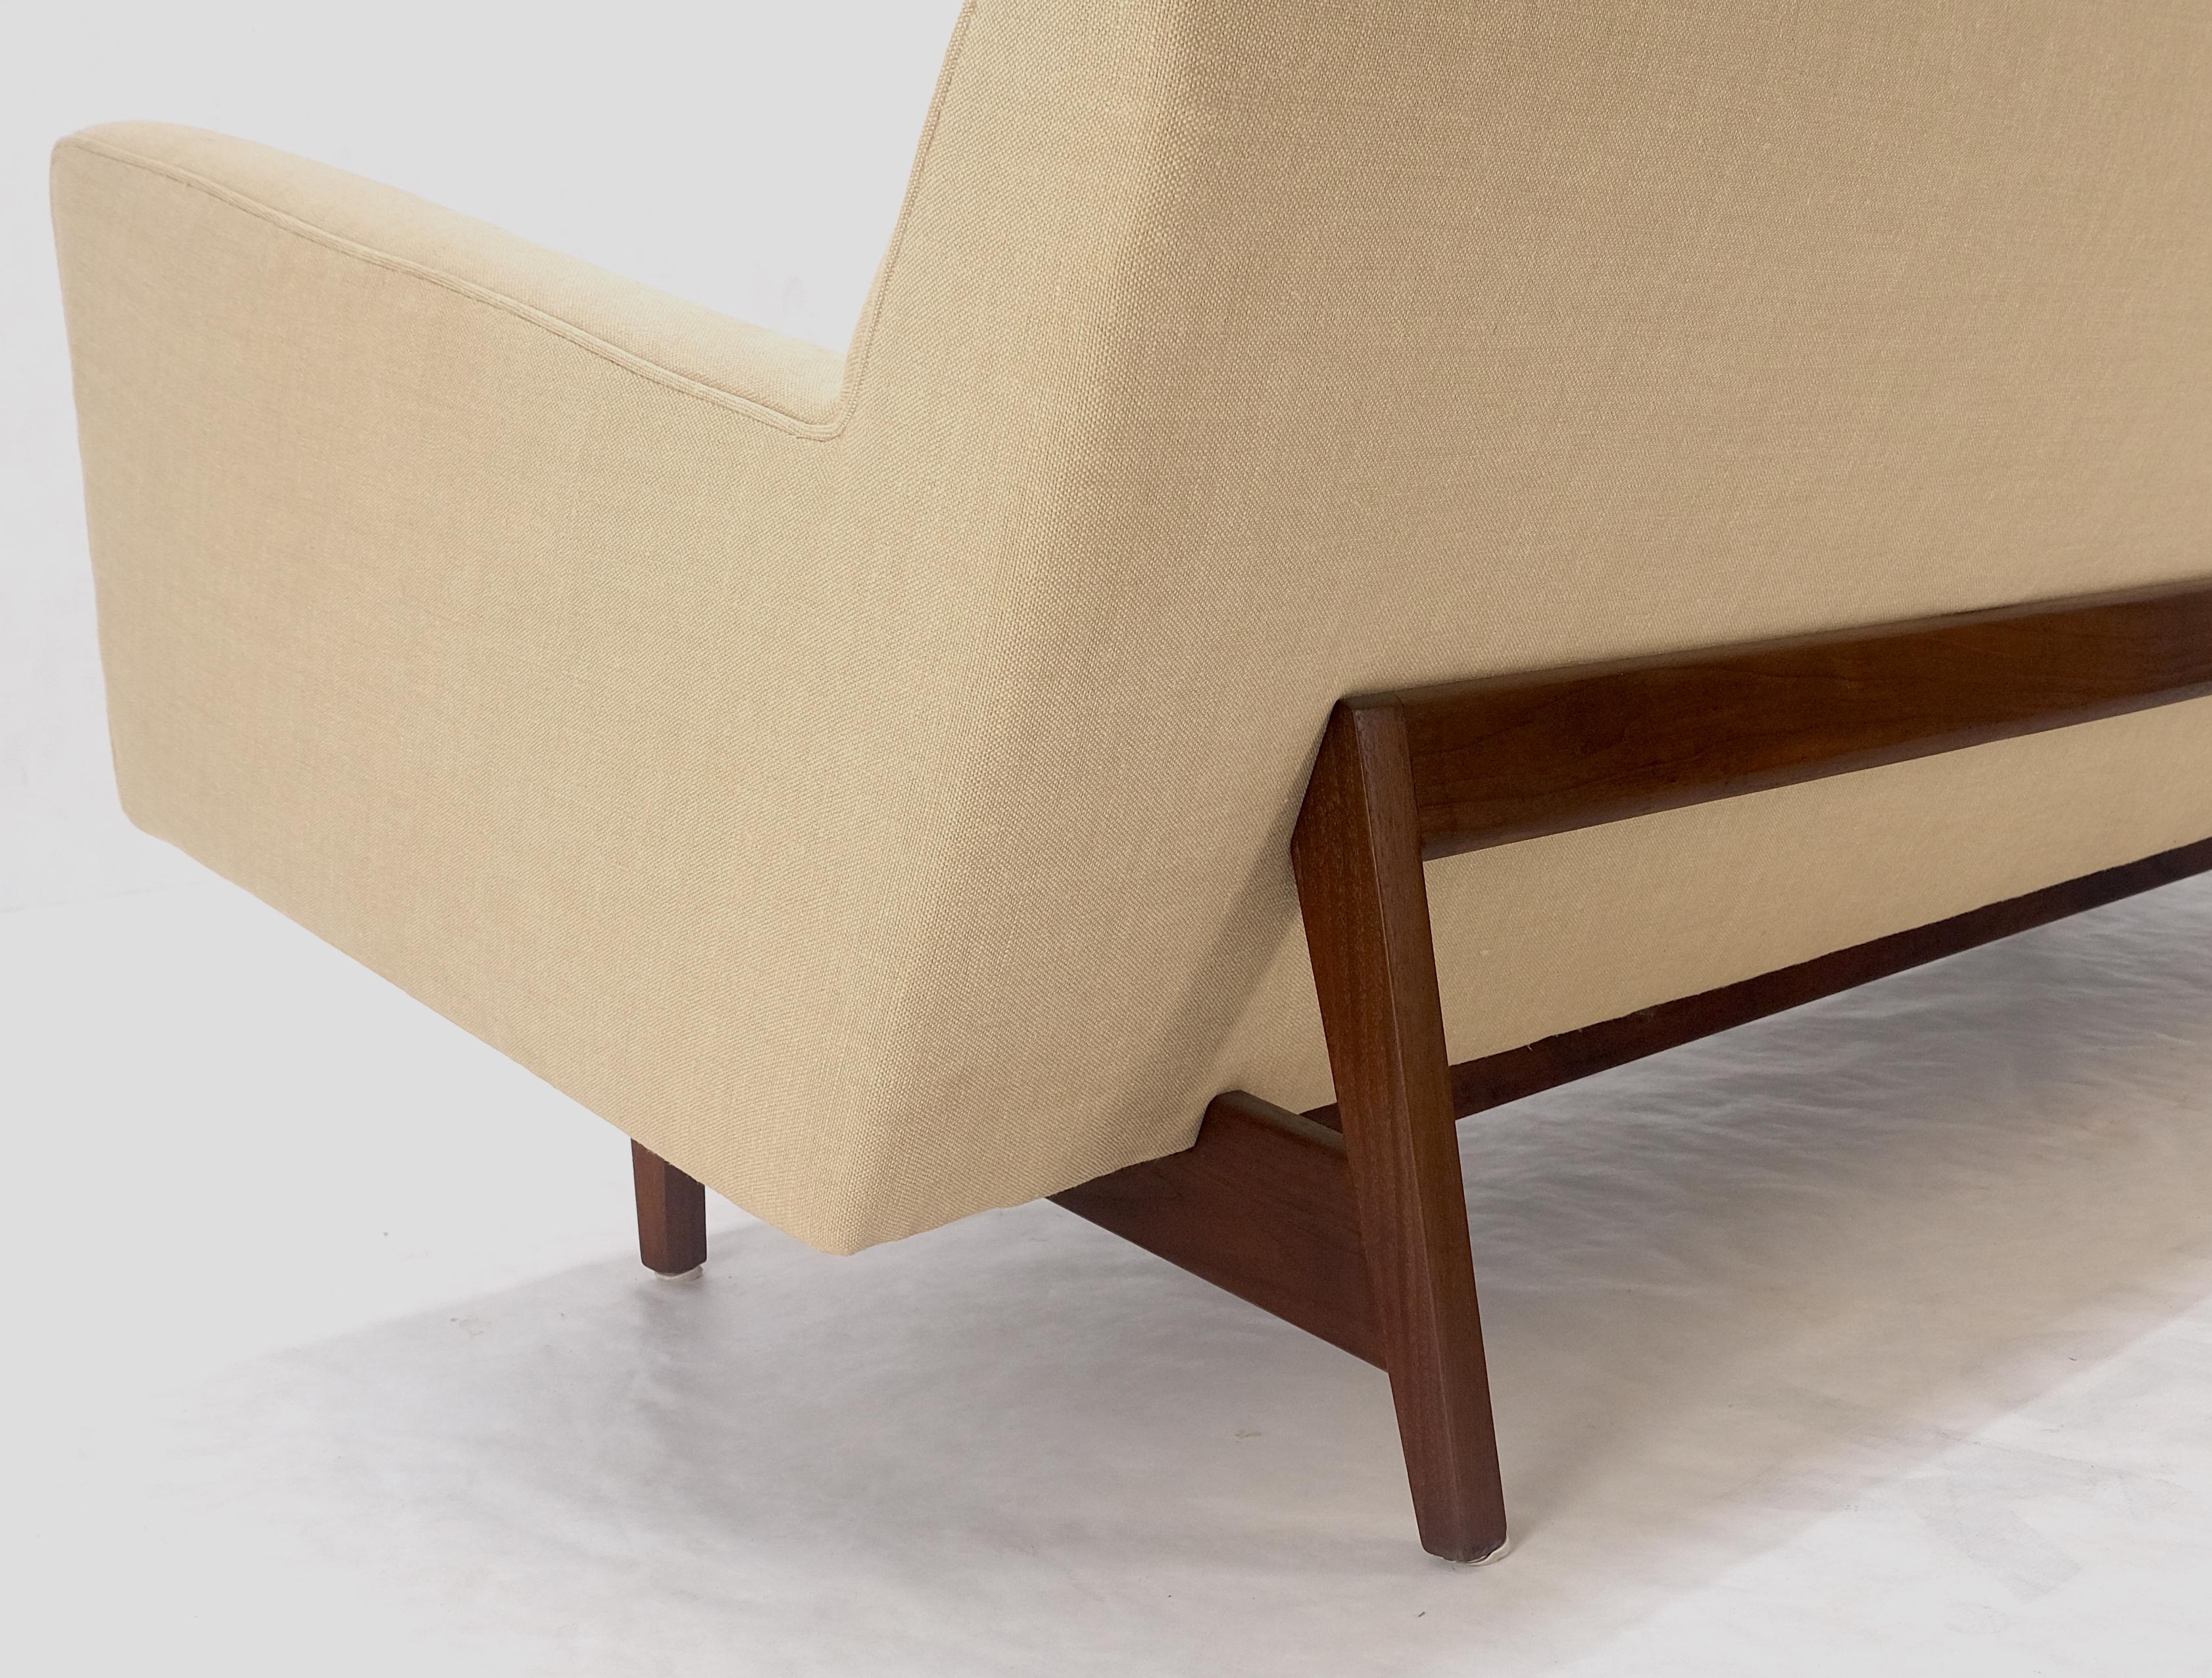 Jens Risom NEW Beige Linen Upholstery Oiled Walnut Frame c1950s U-150 Sofa Couch MINT!